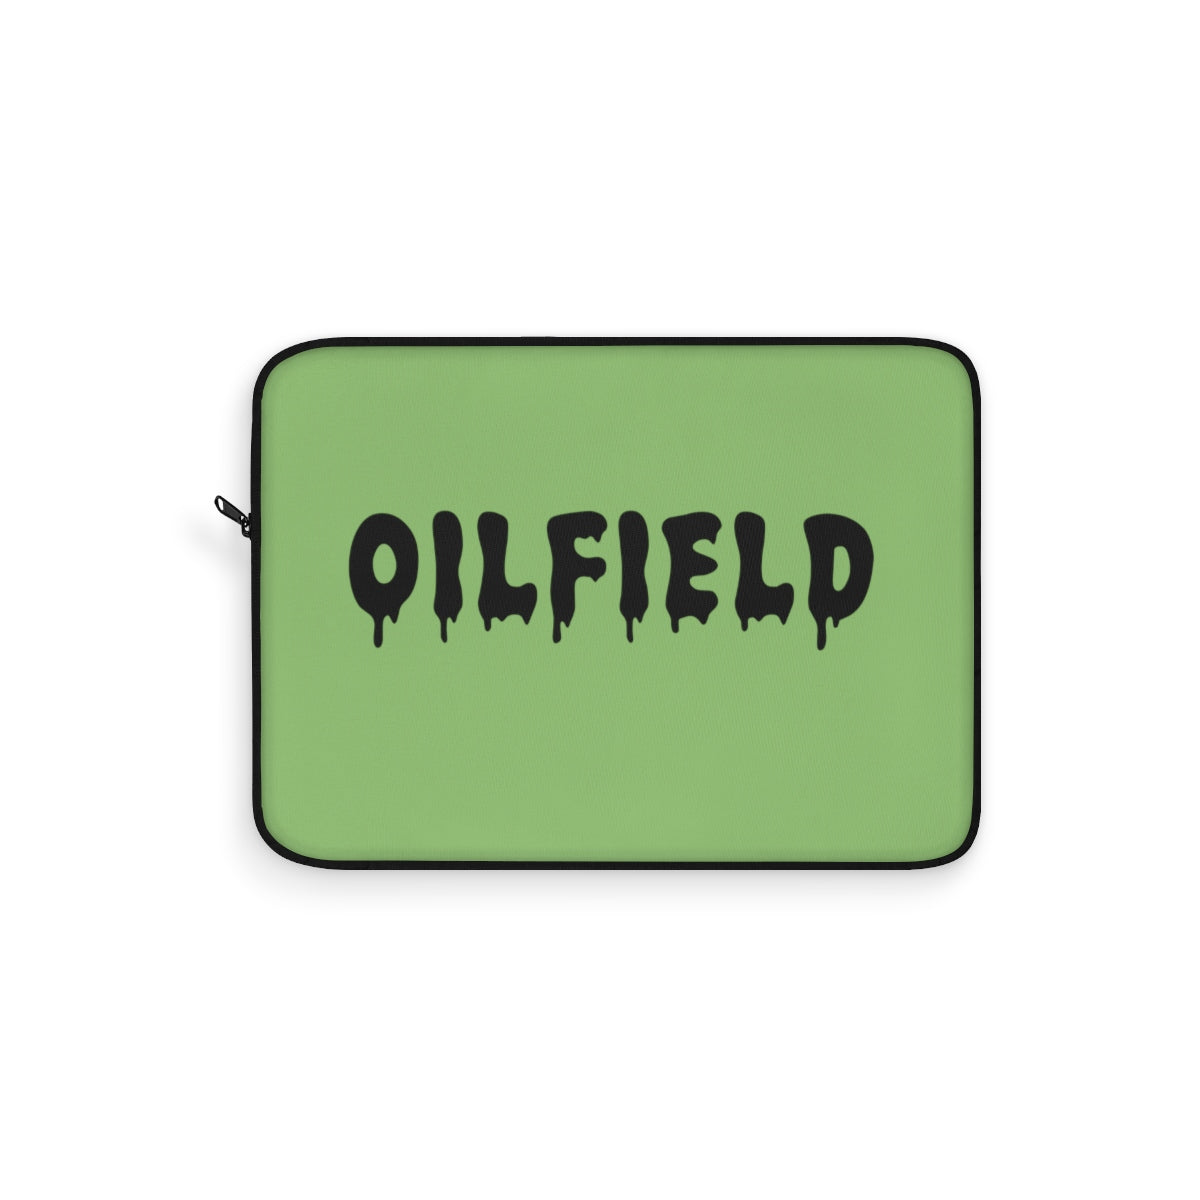 Oilfield Laptop Sleeve (Dollar Bill Green)